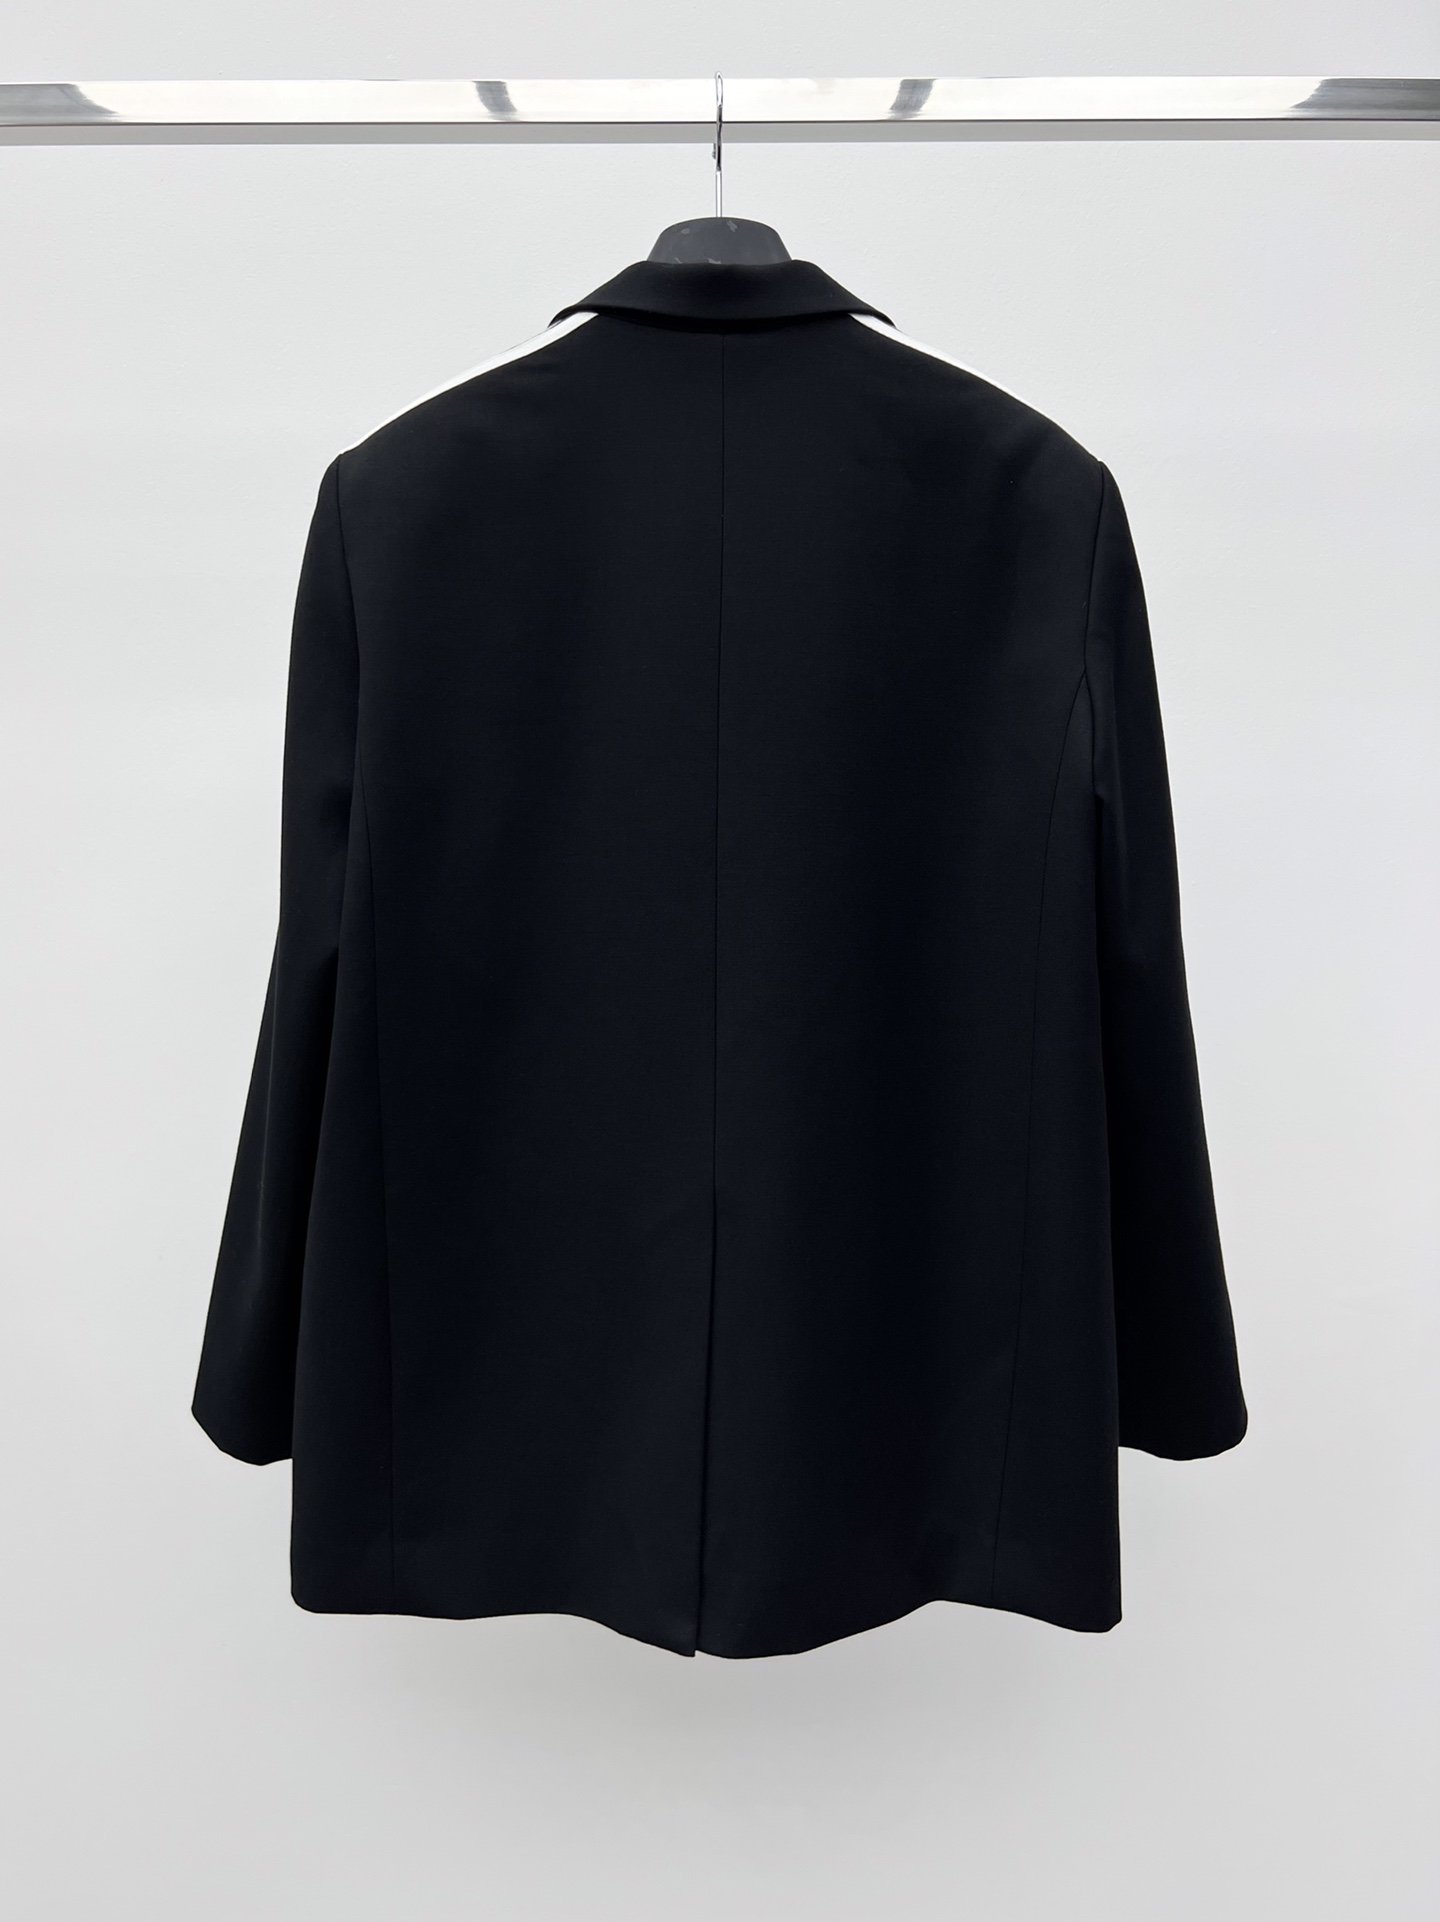 A jacket women's from strips Balenciaga x Adidas фото 6